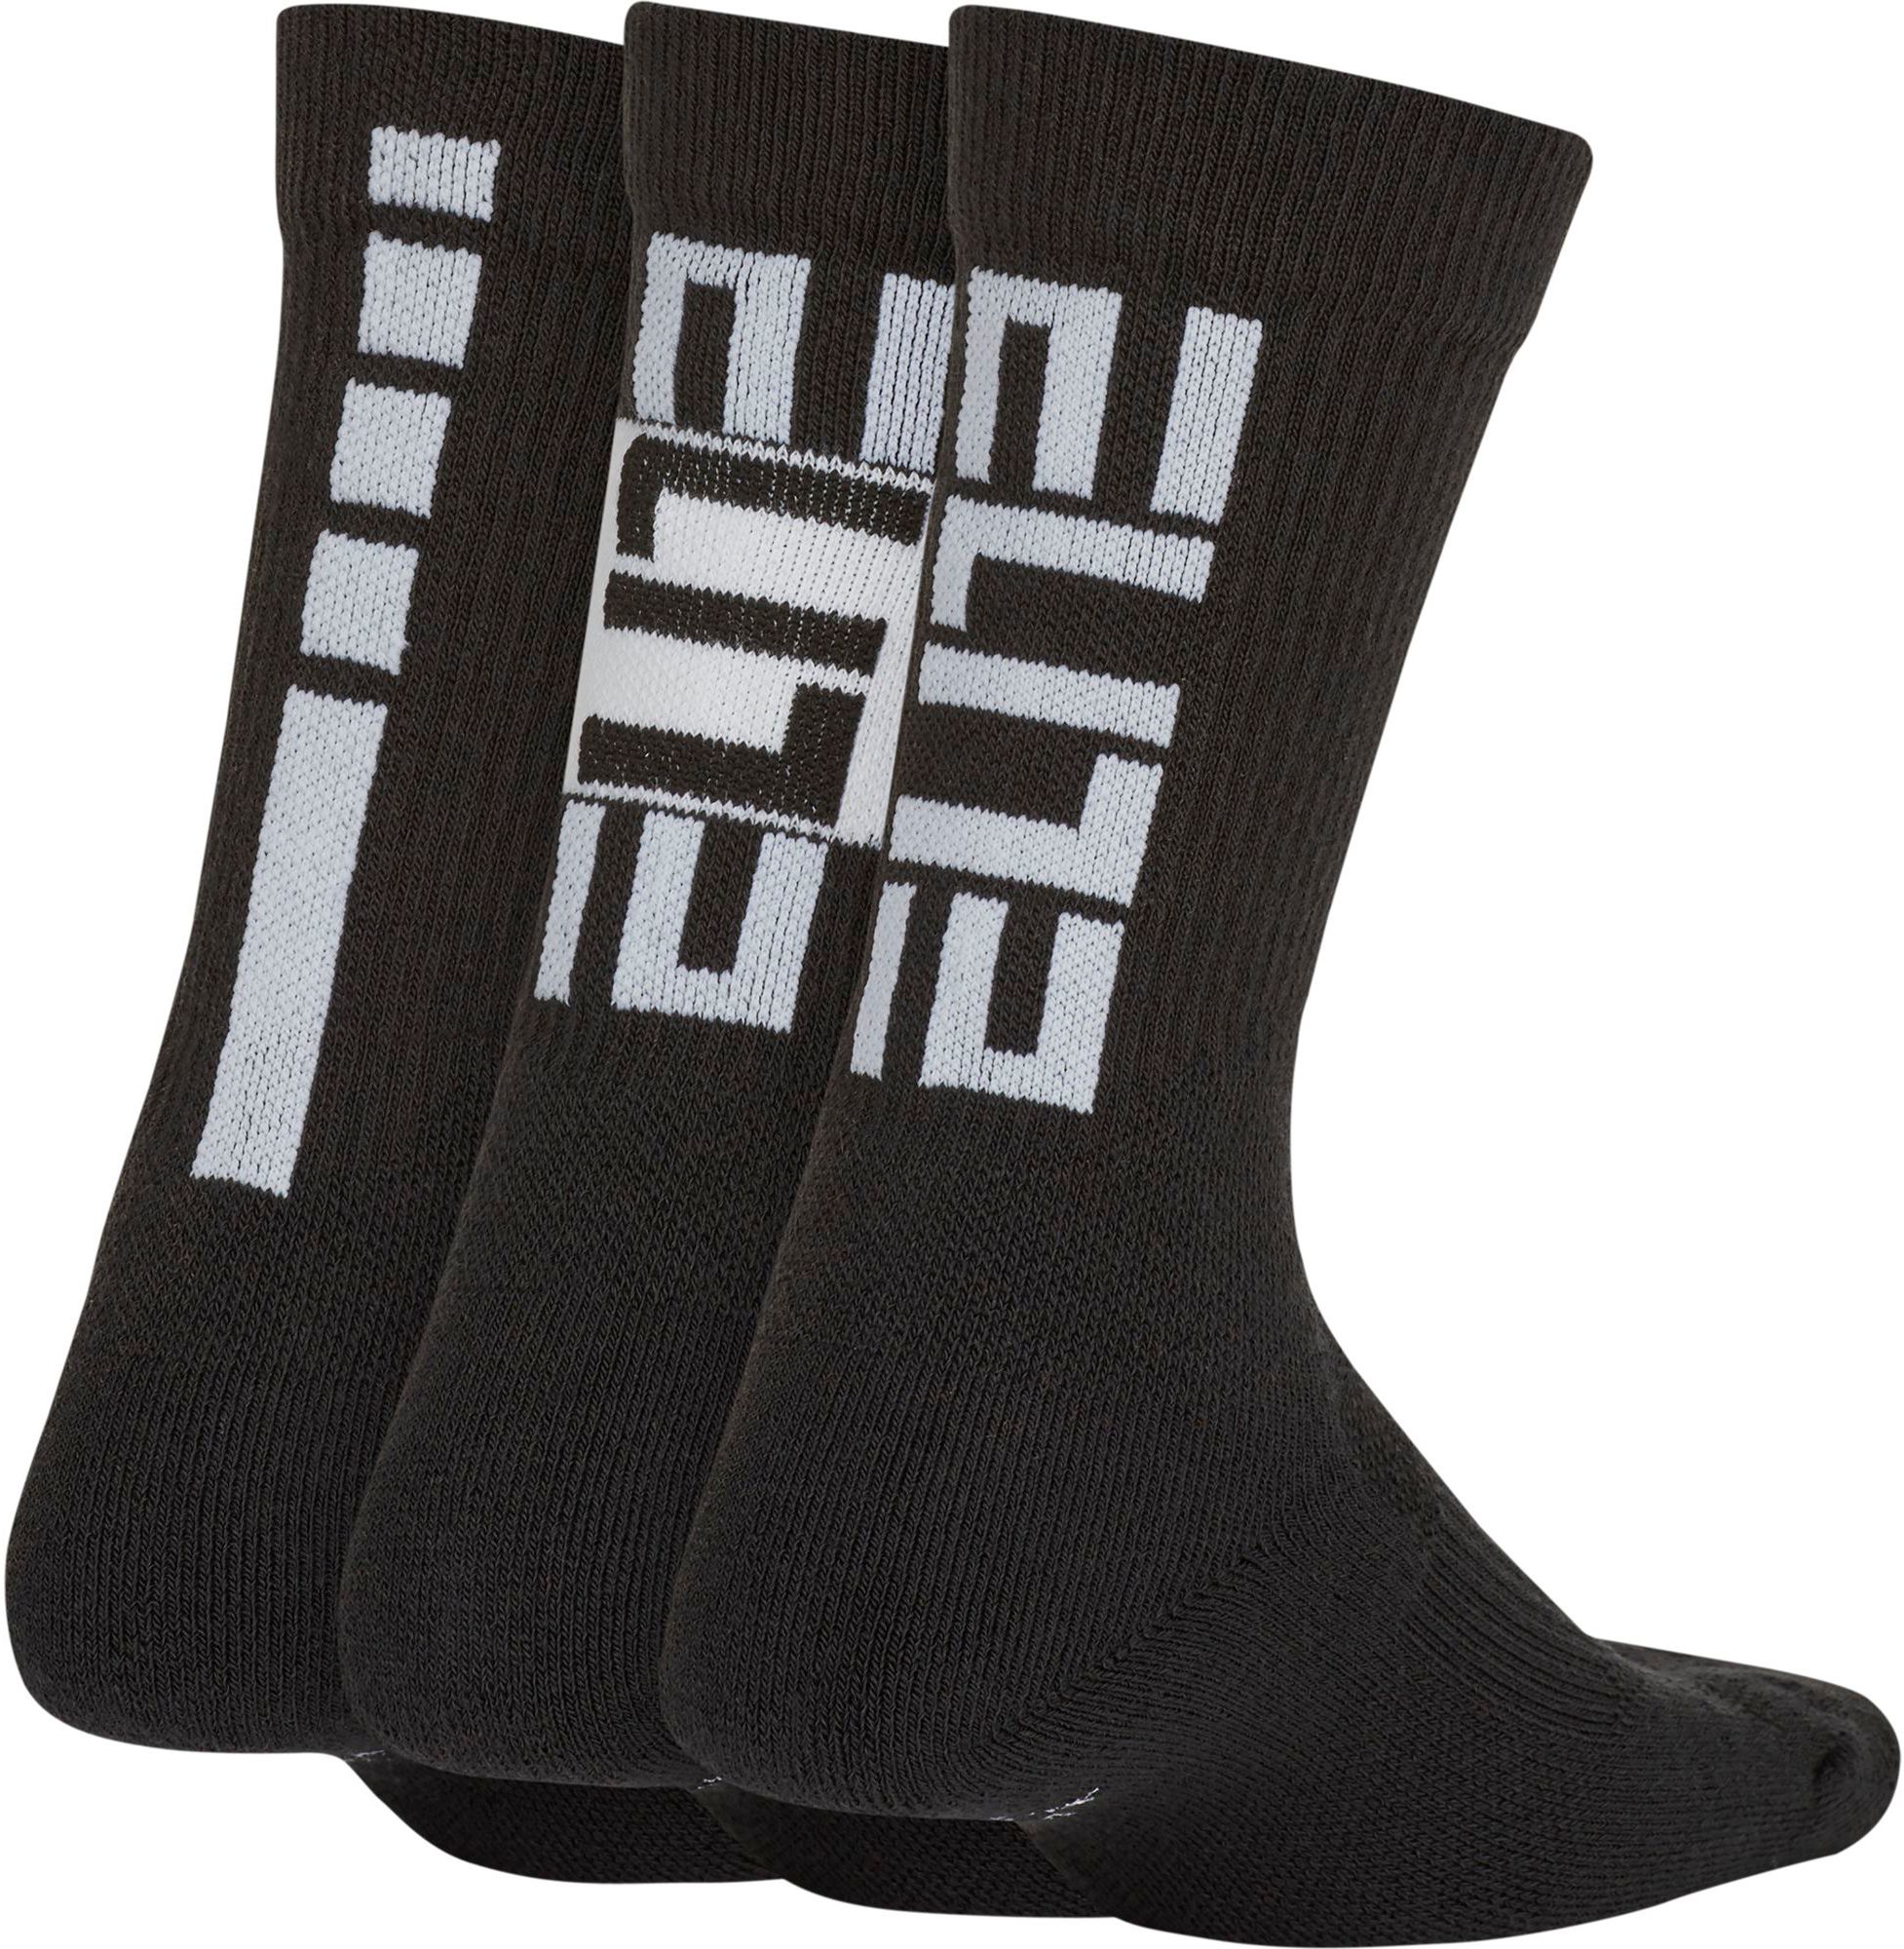 Nike Youth Elite Basketball Socks – 3 Pack